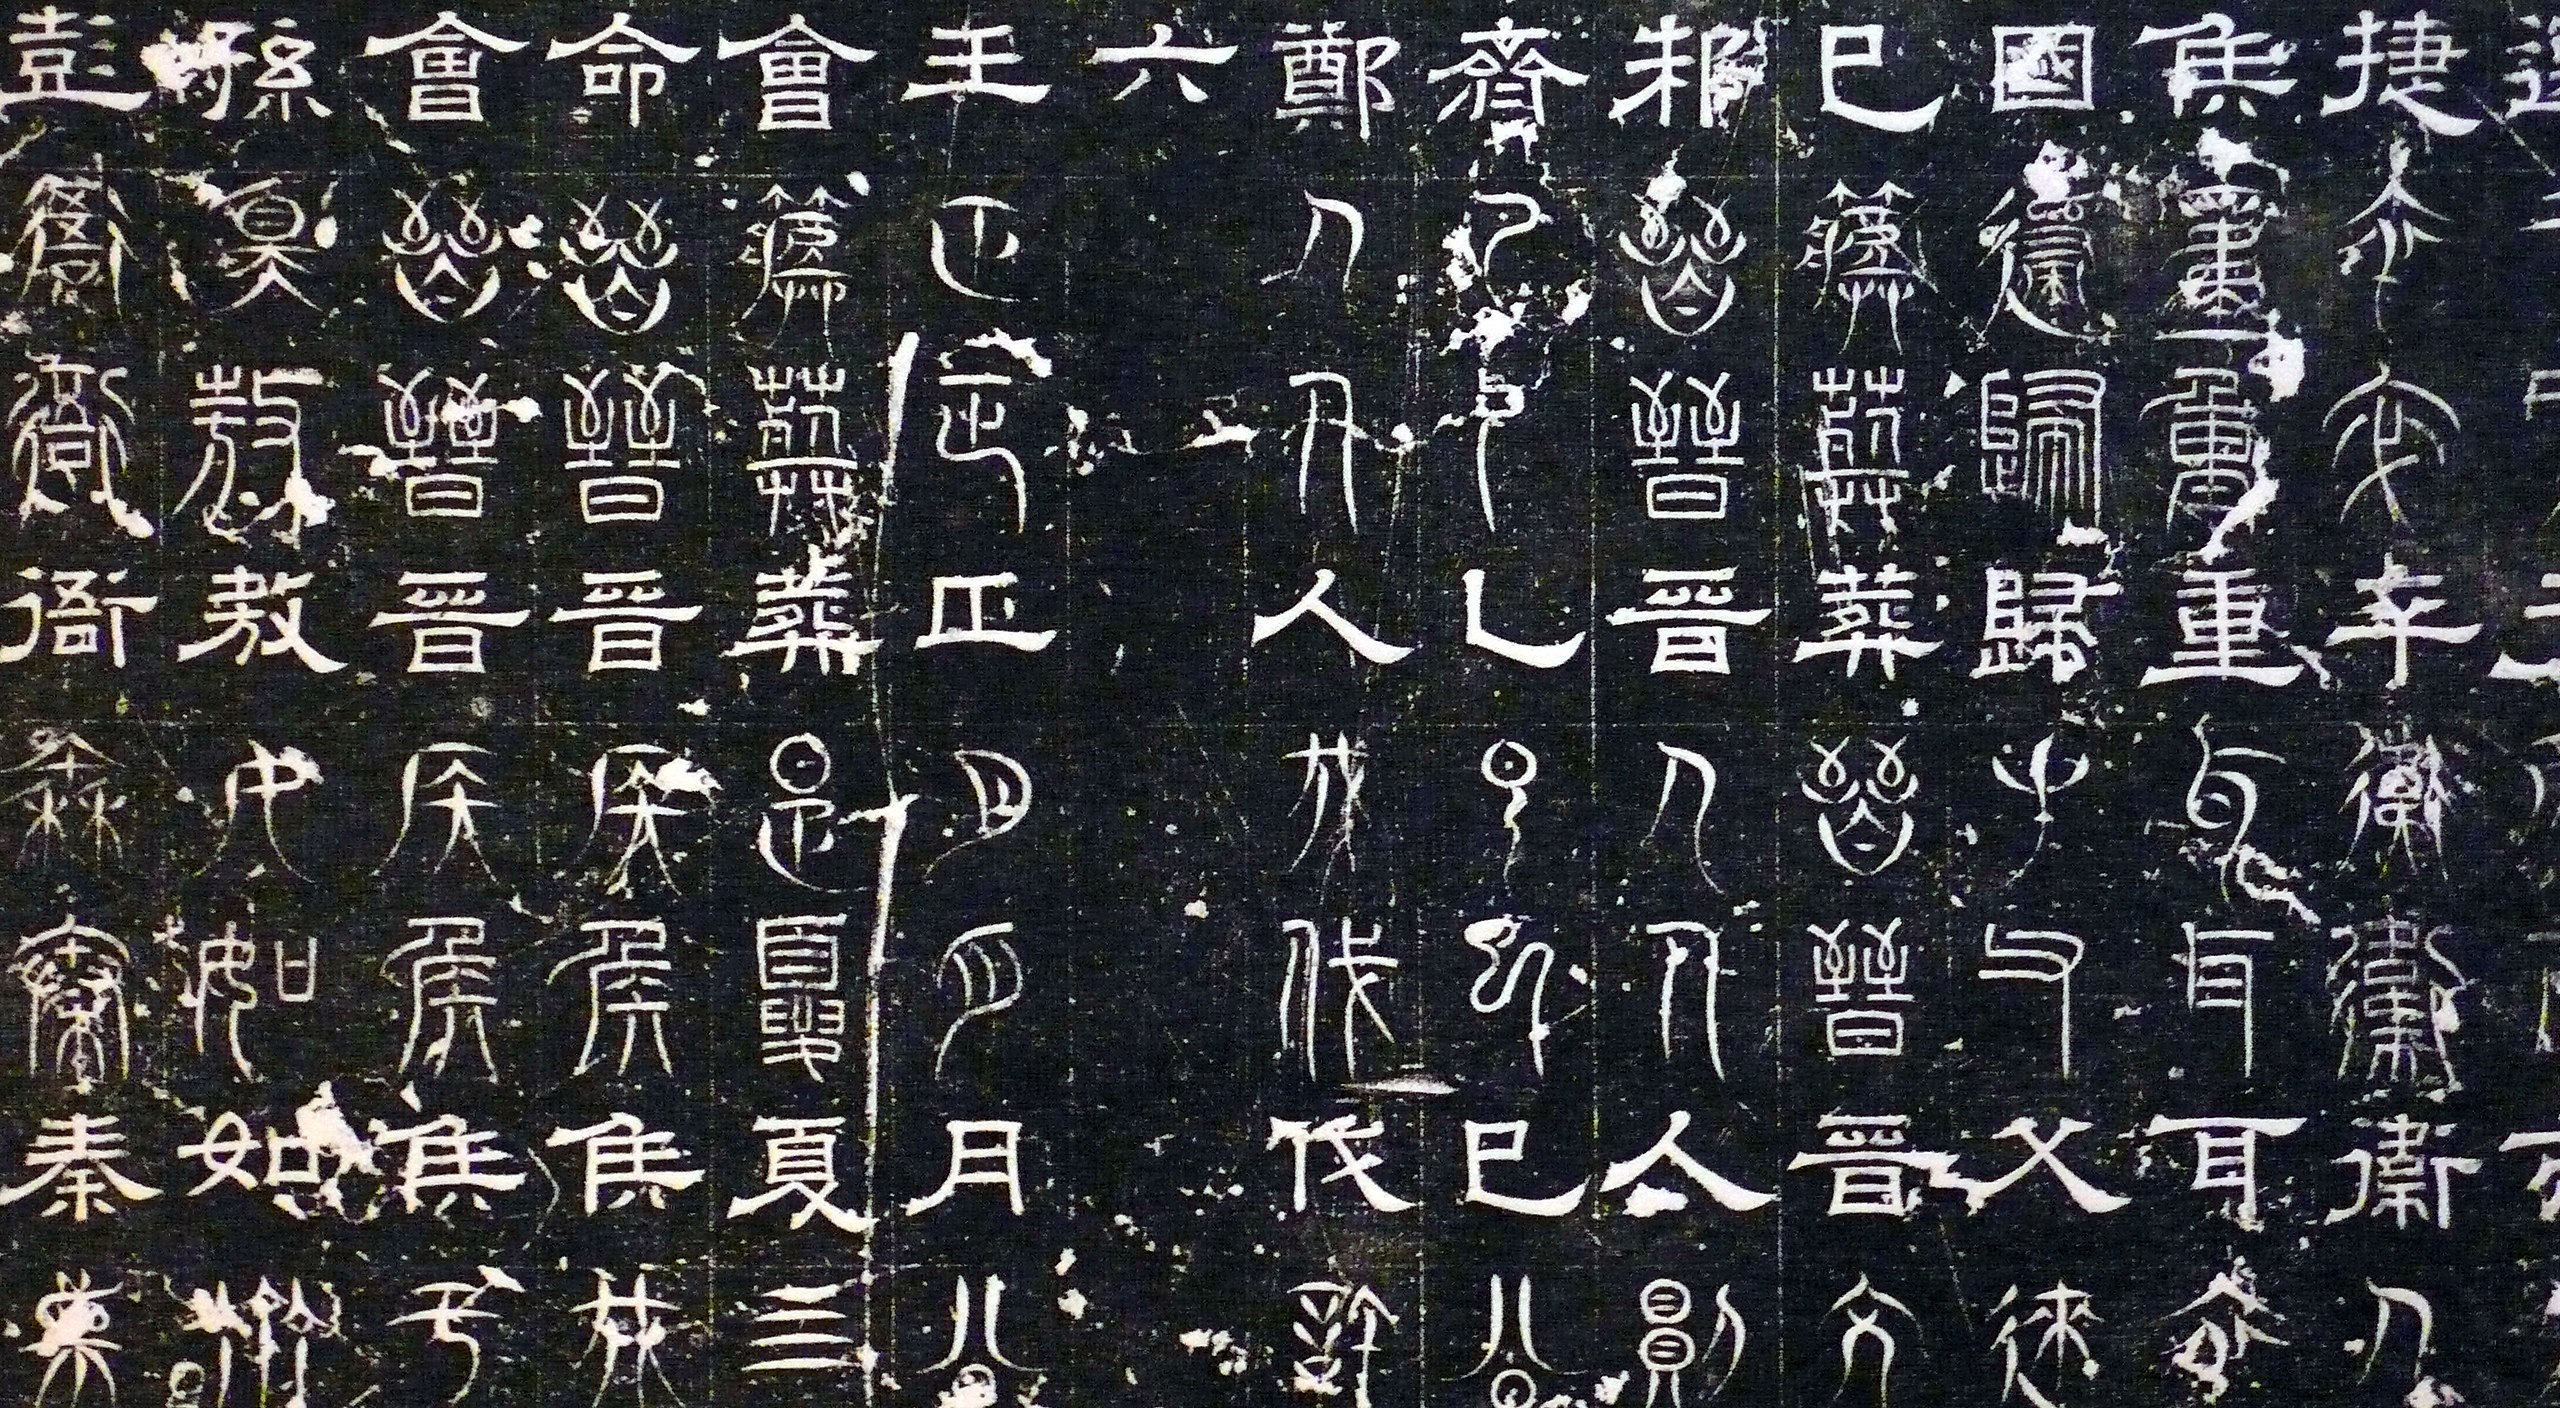 File:三体石经拓片.JPG - Wikipedia